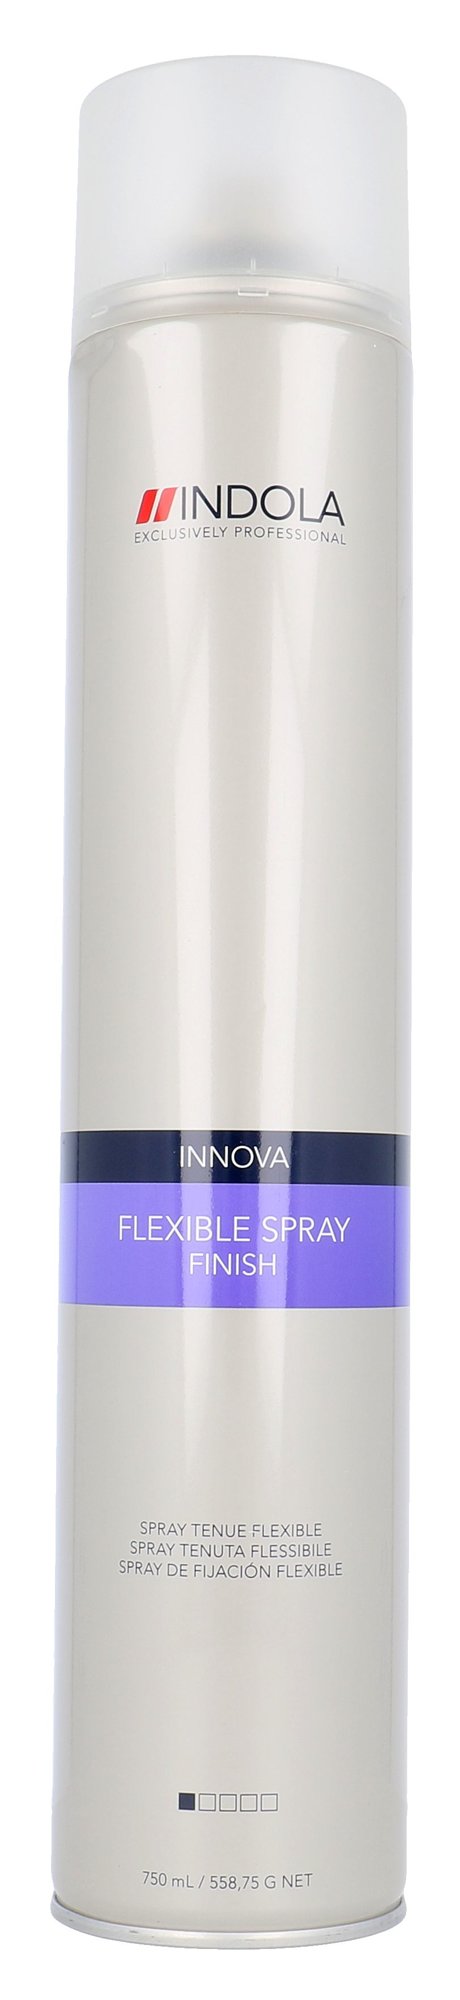 Indola Innova Finish Flexible Spray 750ml plaukų lakas